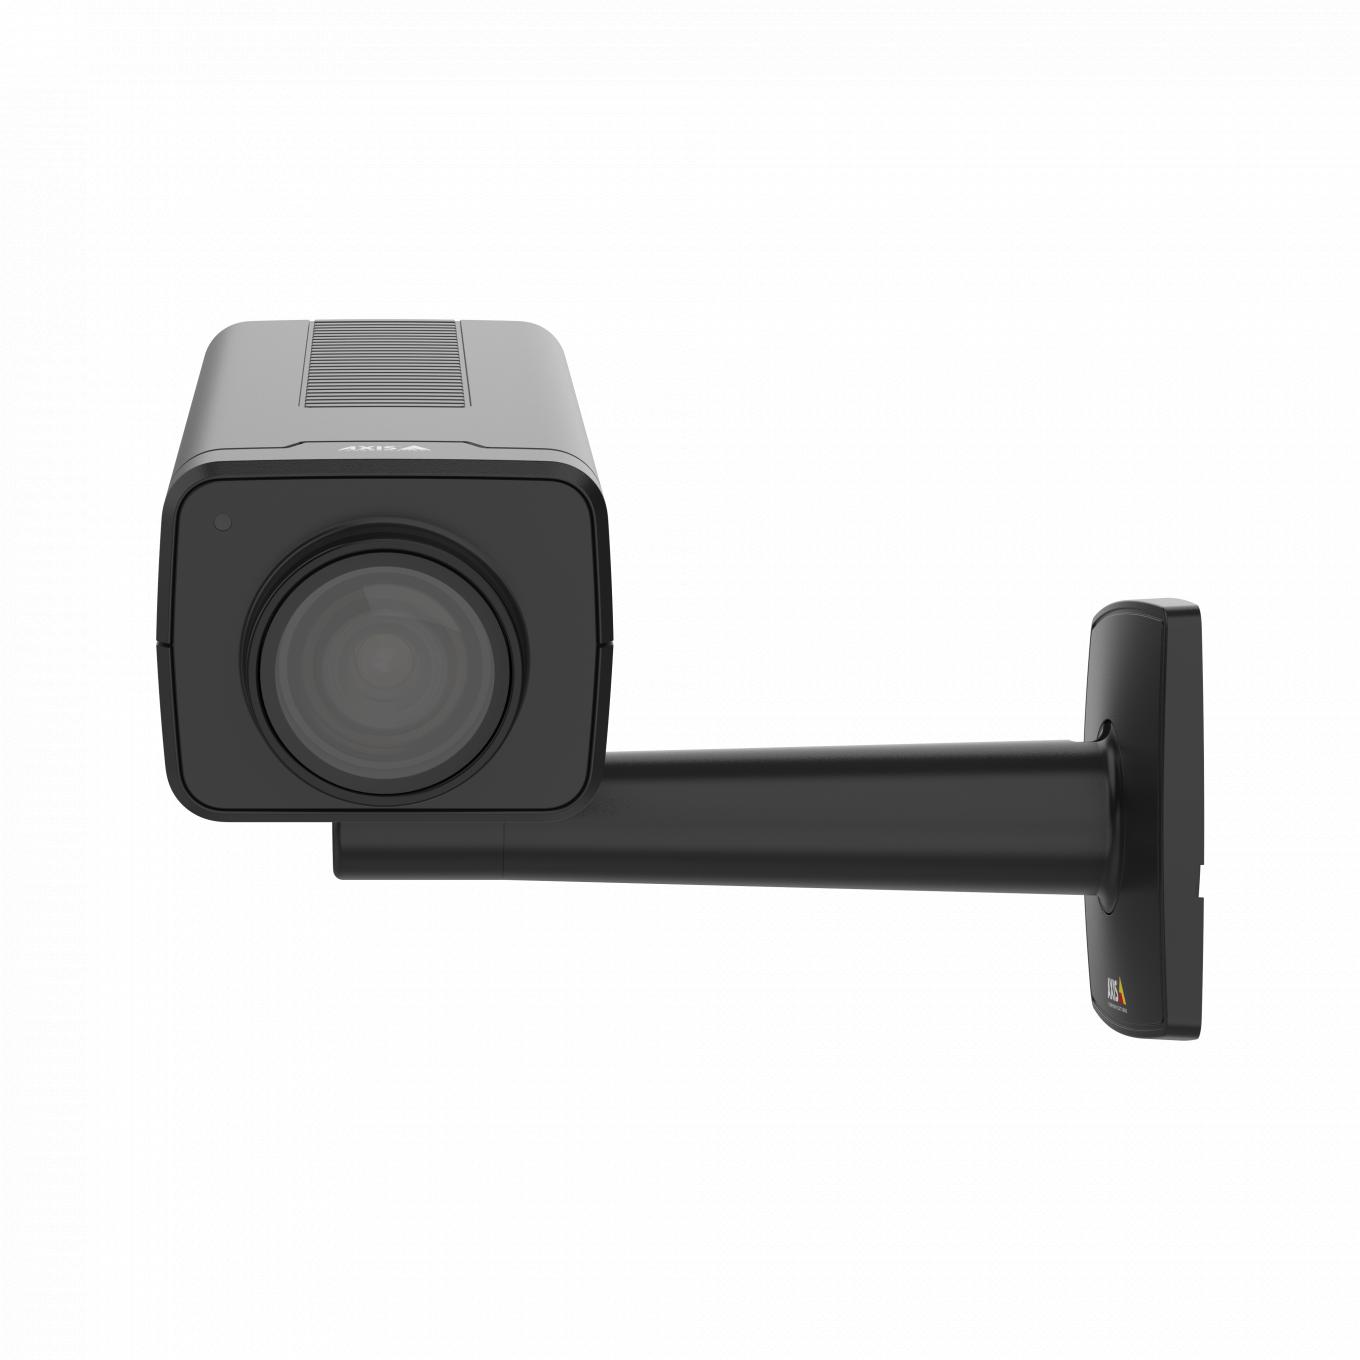  Блочная камера AXIS Q1715 Block Camera, вид спереди